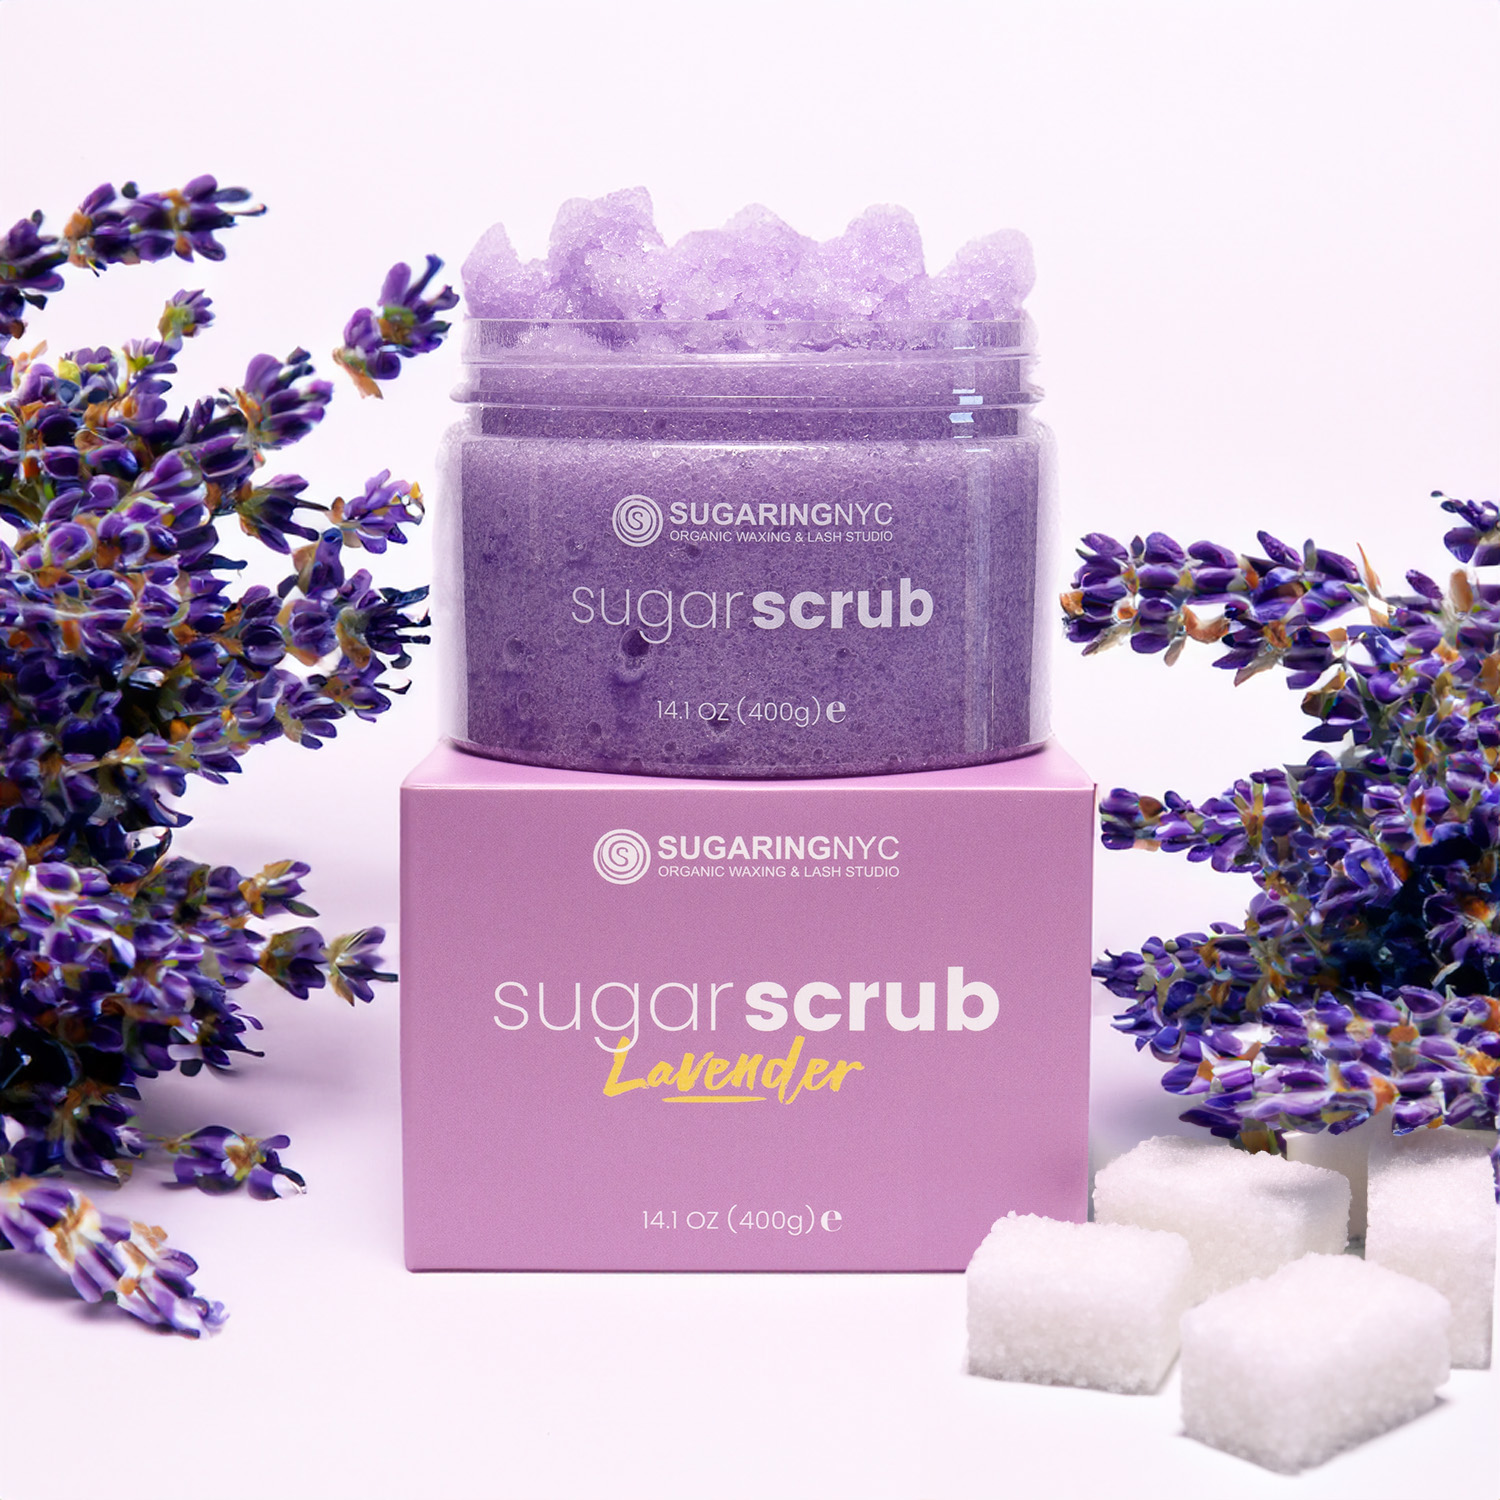 Sugaring NYC Signature Sugar Scrub – Lavender Field